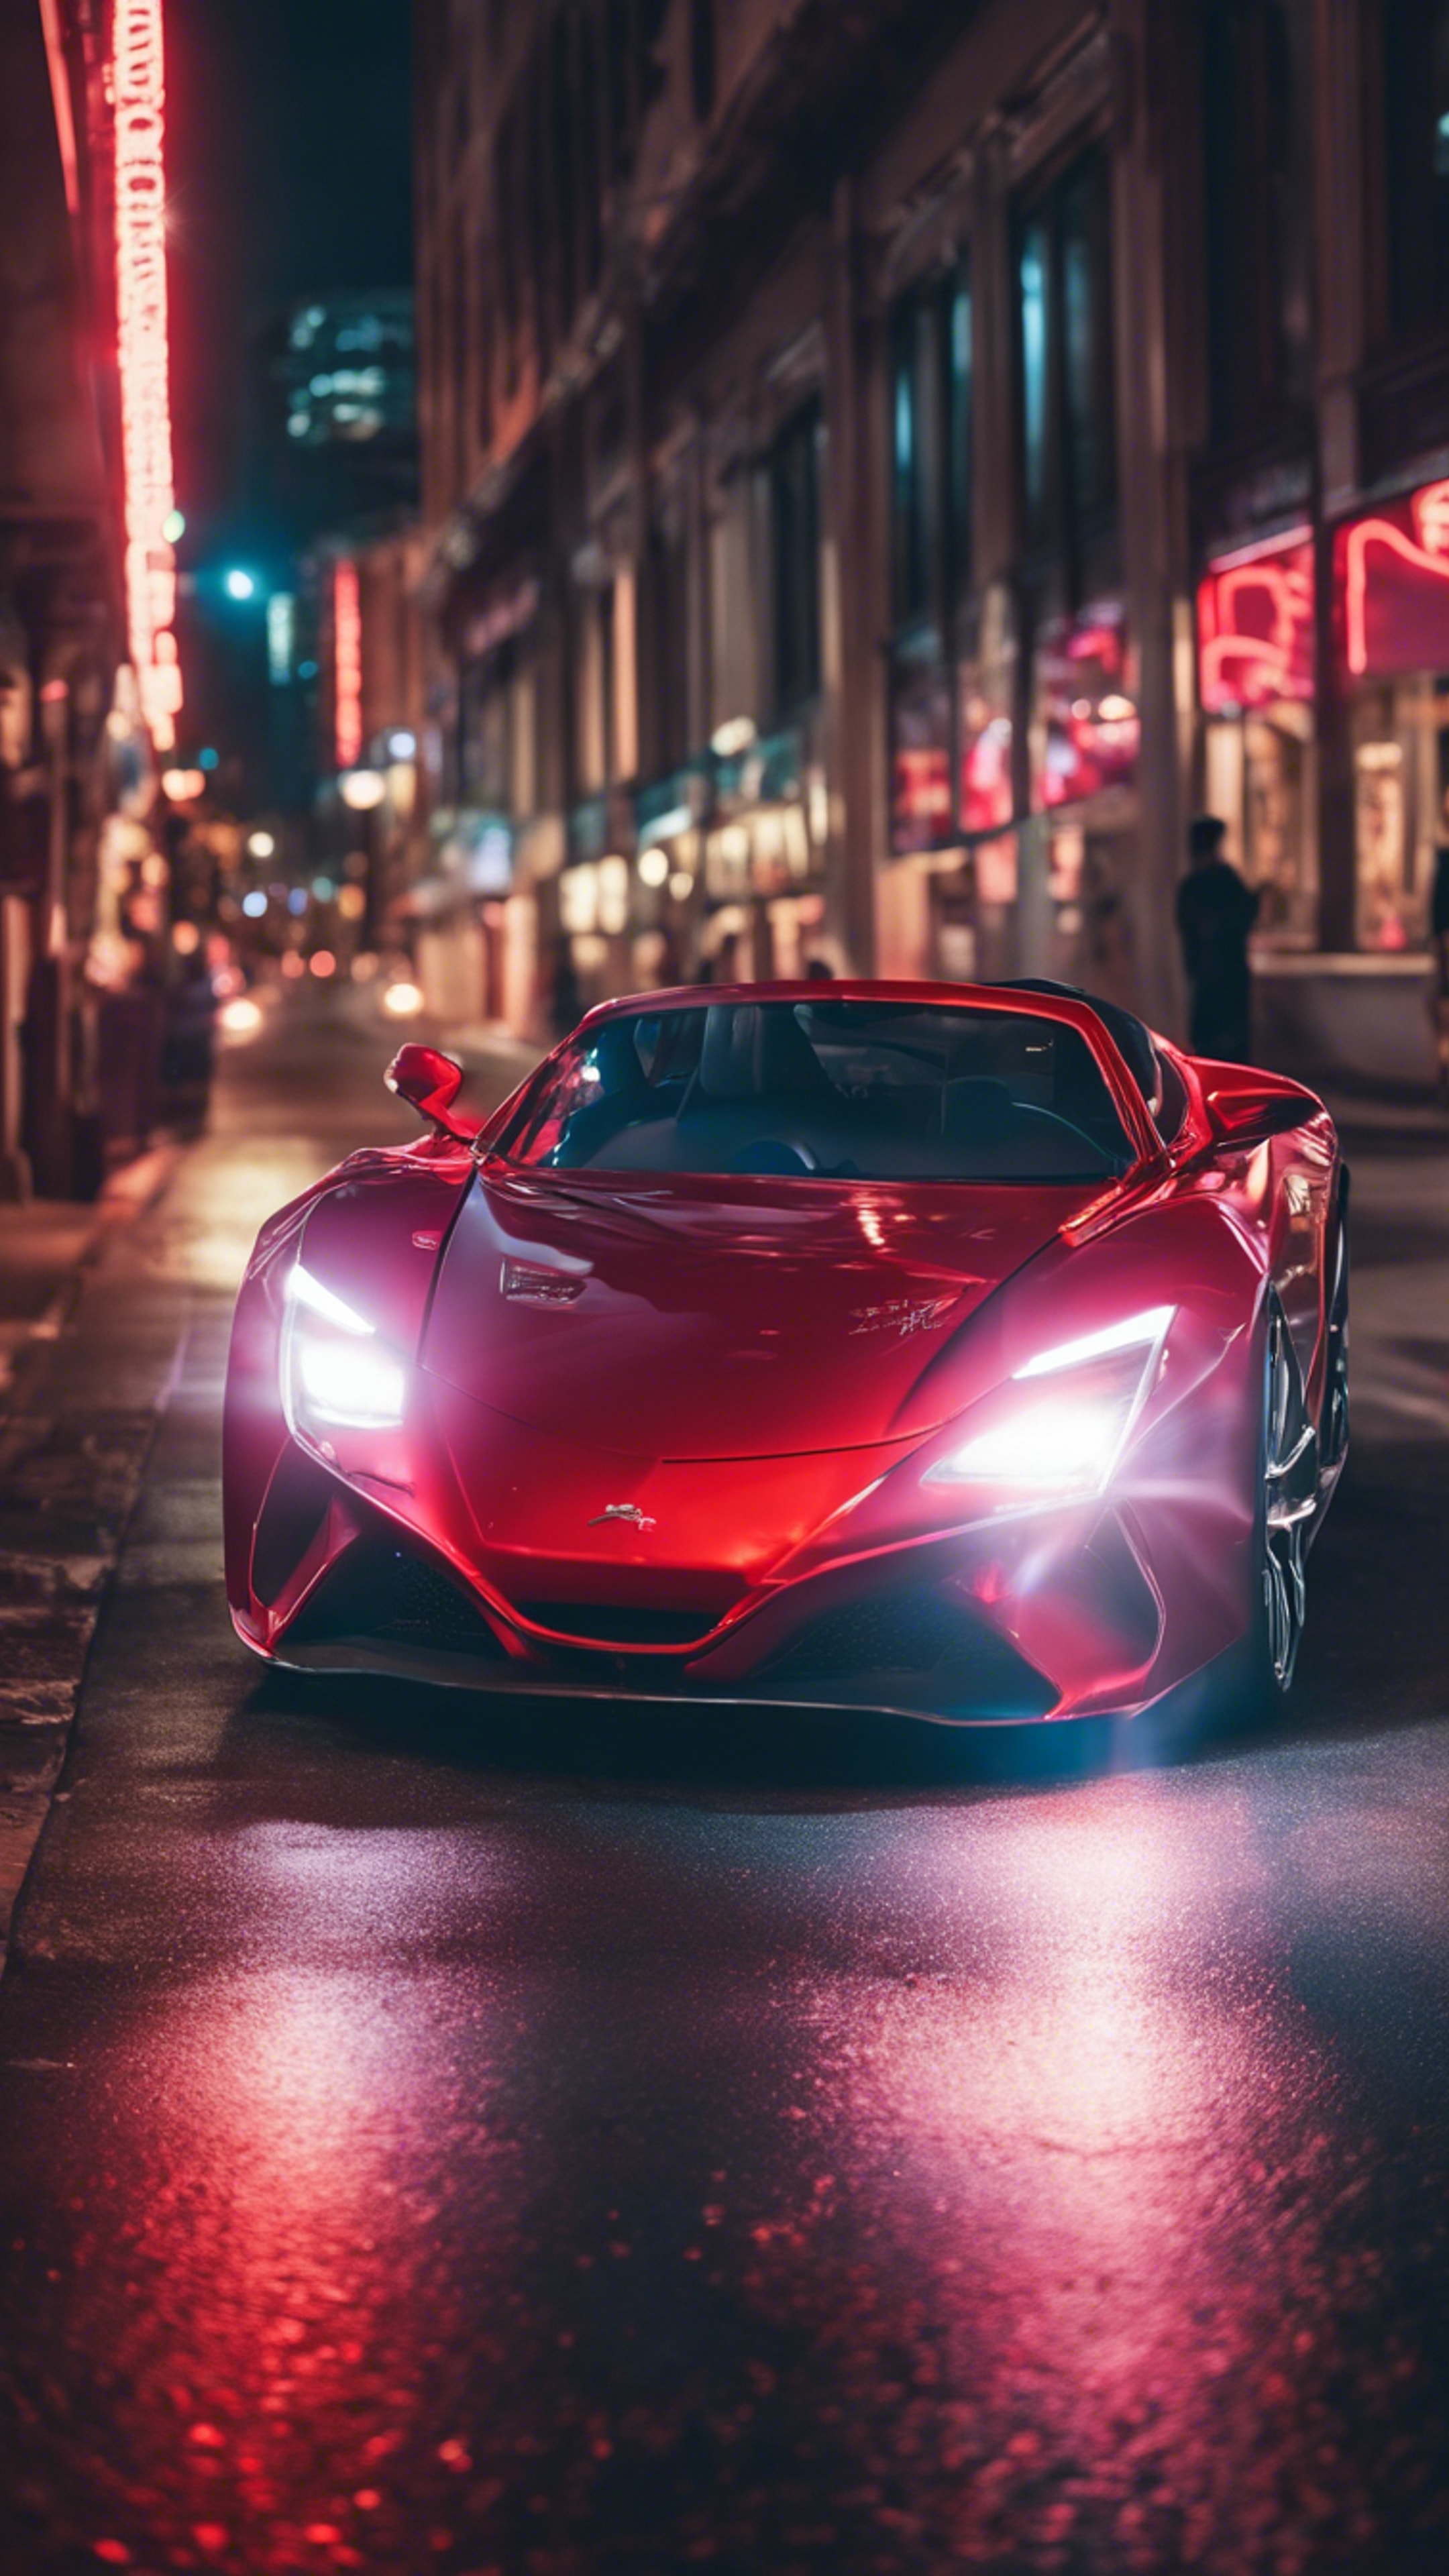 A sleek, cool red neon sports car zipping along a nighttime city street. 벽지[c8ae8bc93cf04b2eb441]